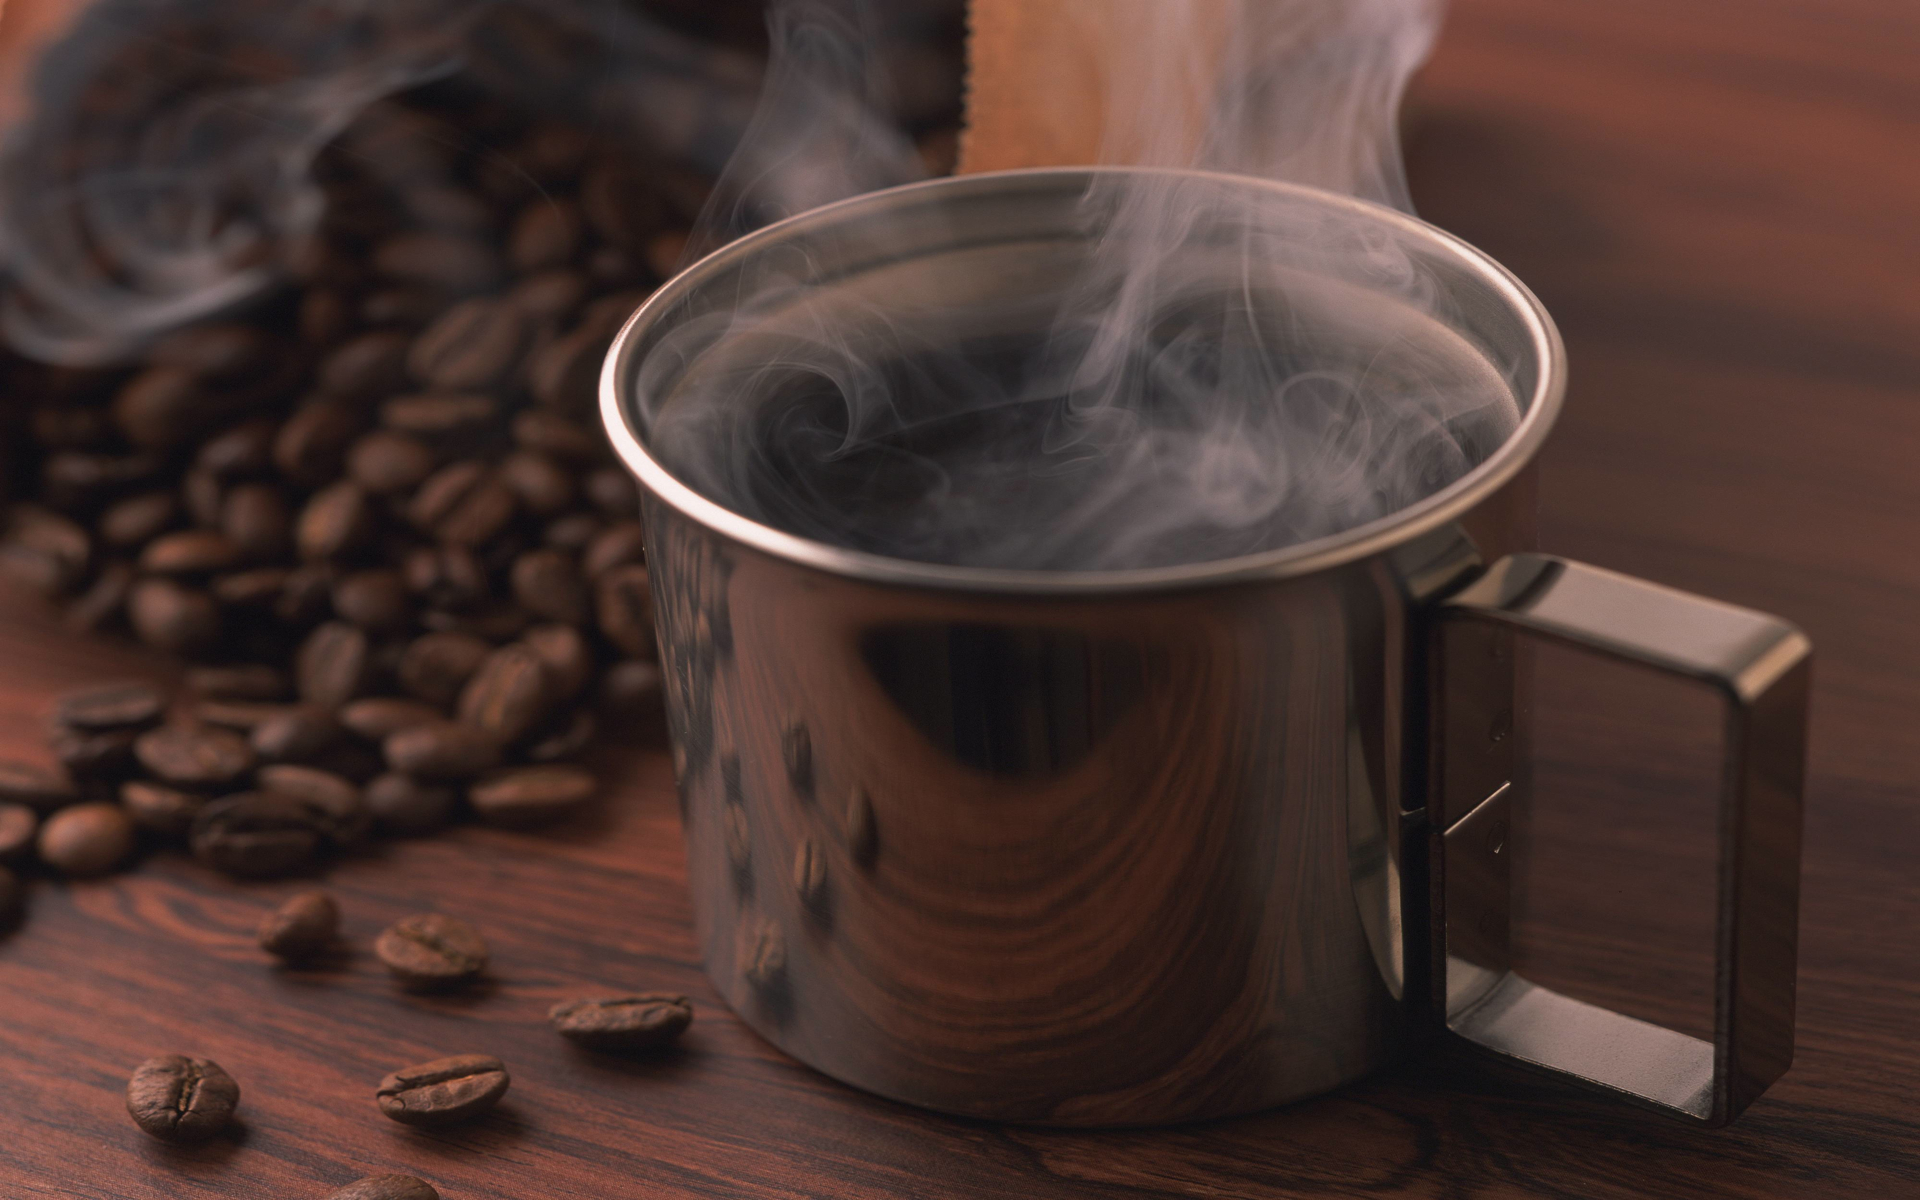 steam, coffee, mugs - desktop wallpaper